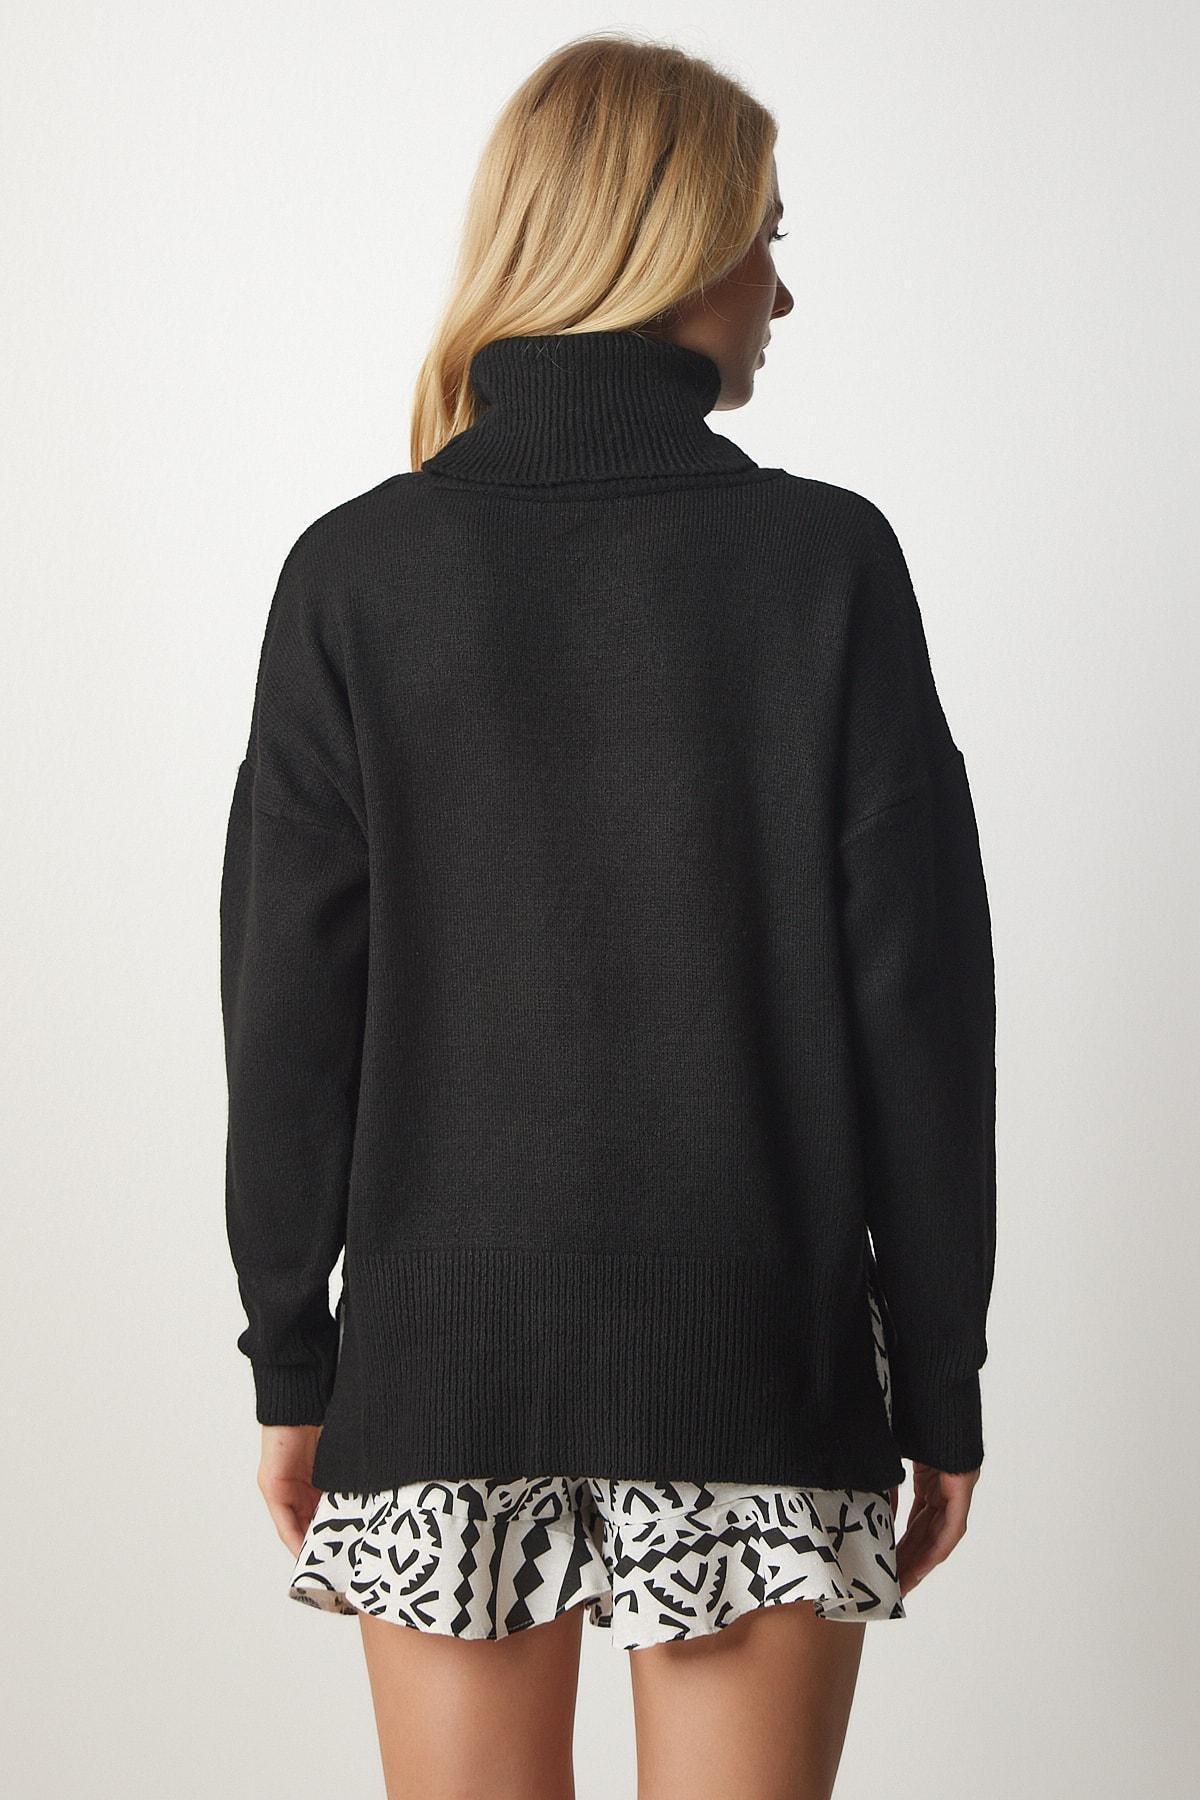 Happiness Istanbul - Black Turtleneck Knitwear Sweater